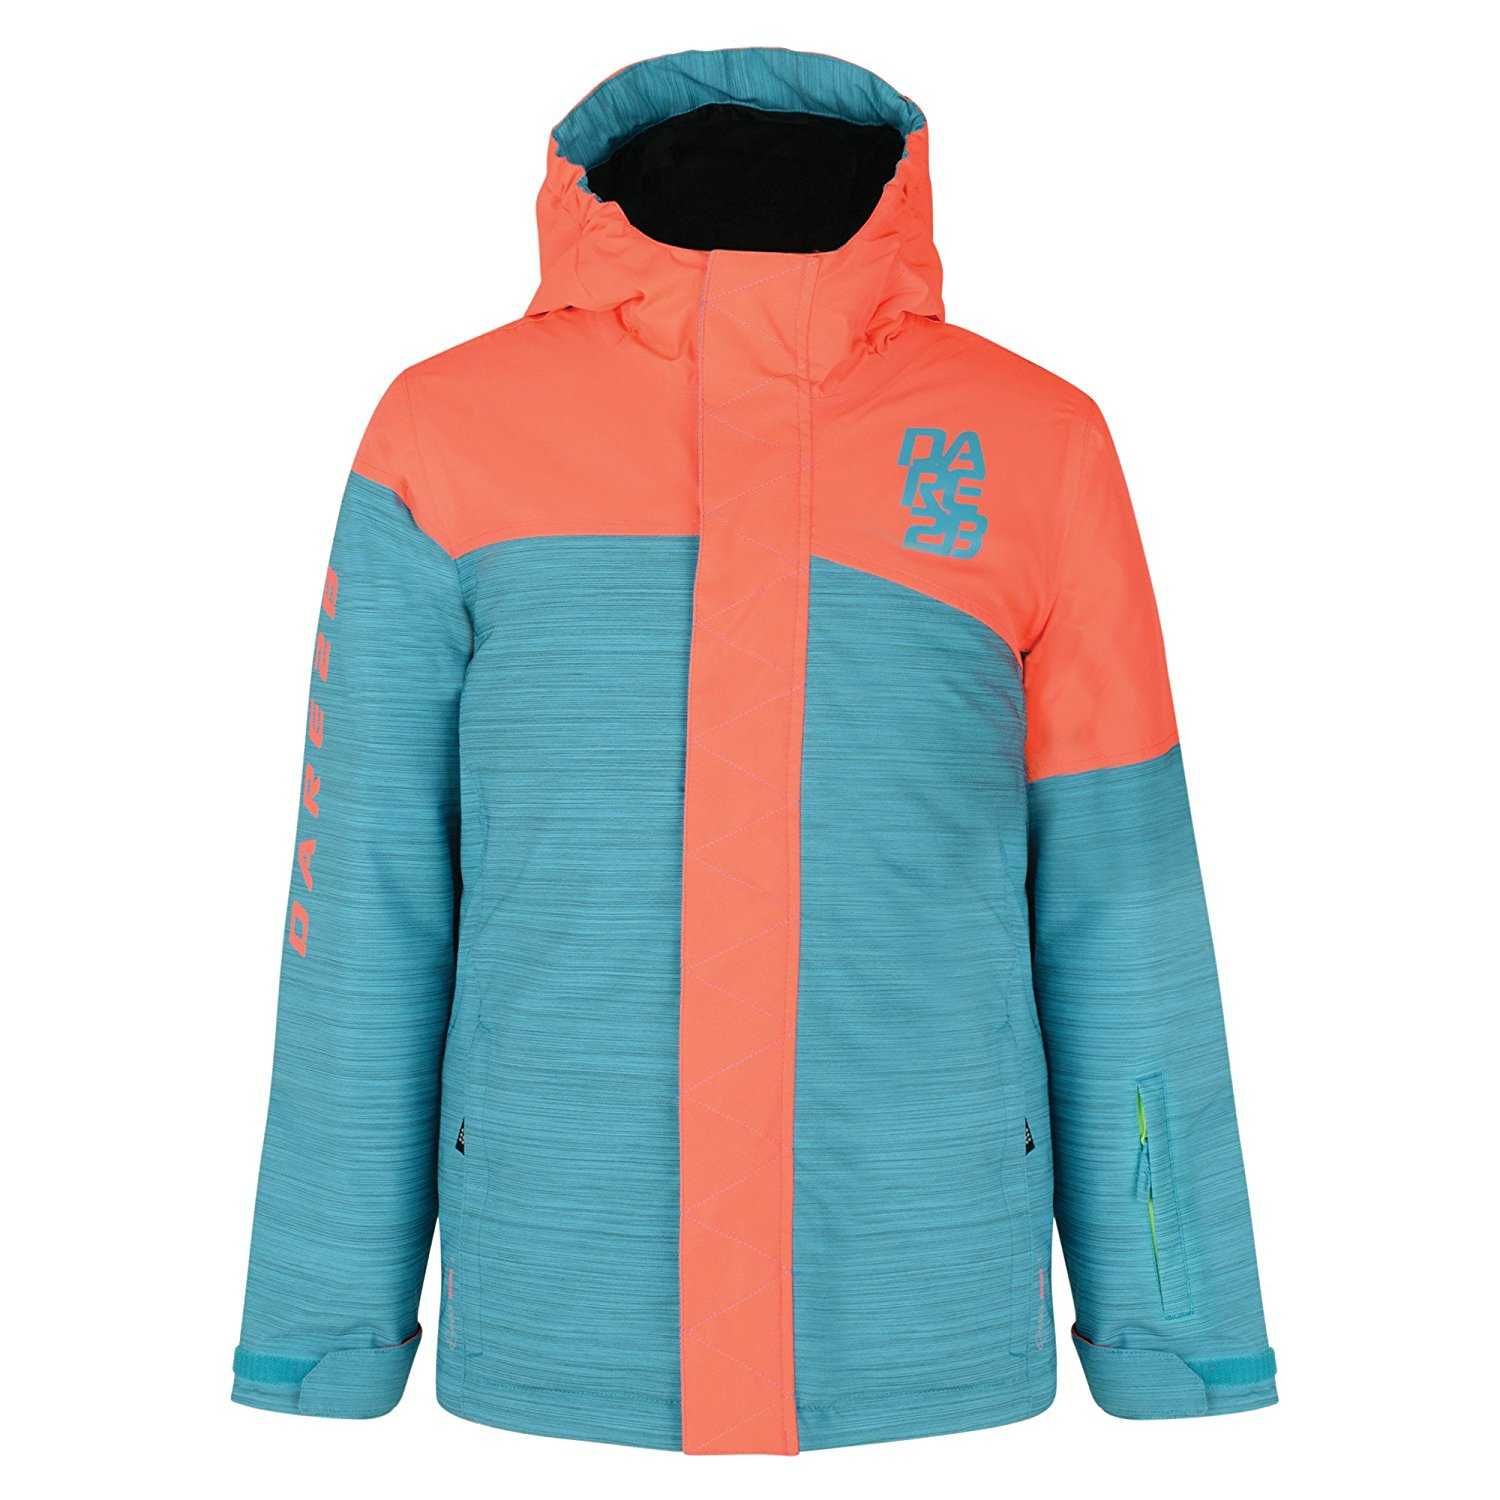 Veste de Ski Wiseguy Jacket - Aqua Blue Texture/ Fiery Coral 1